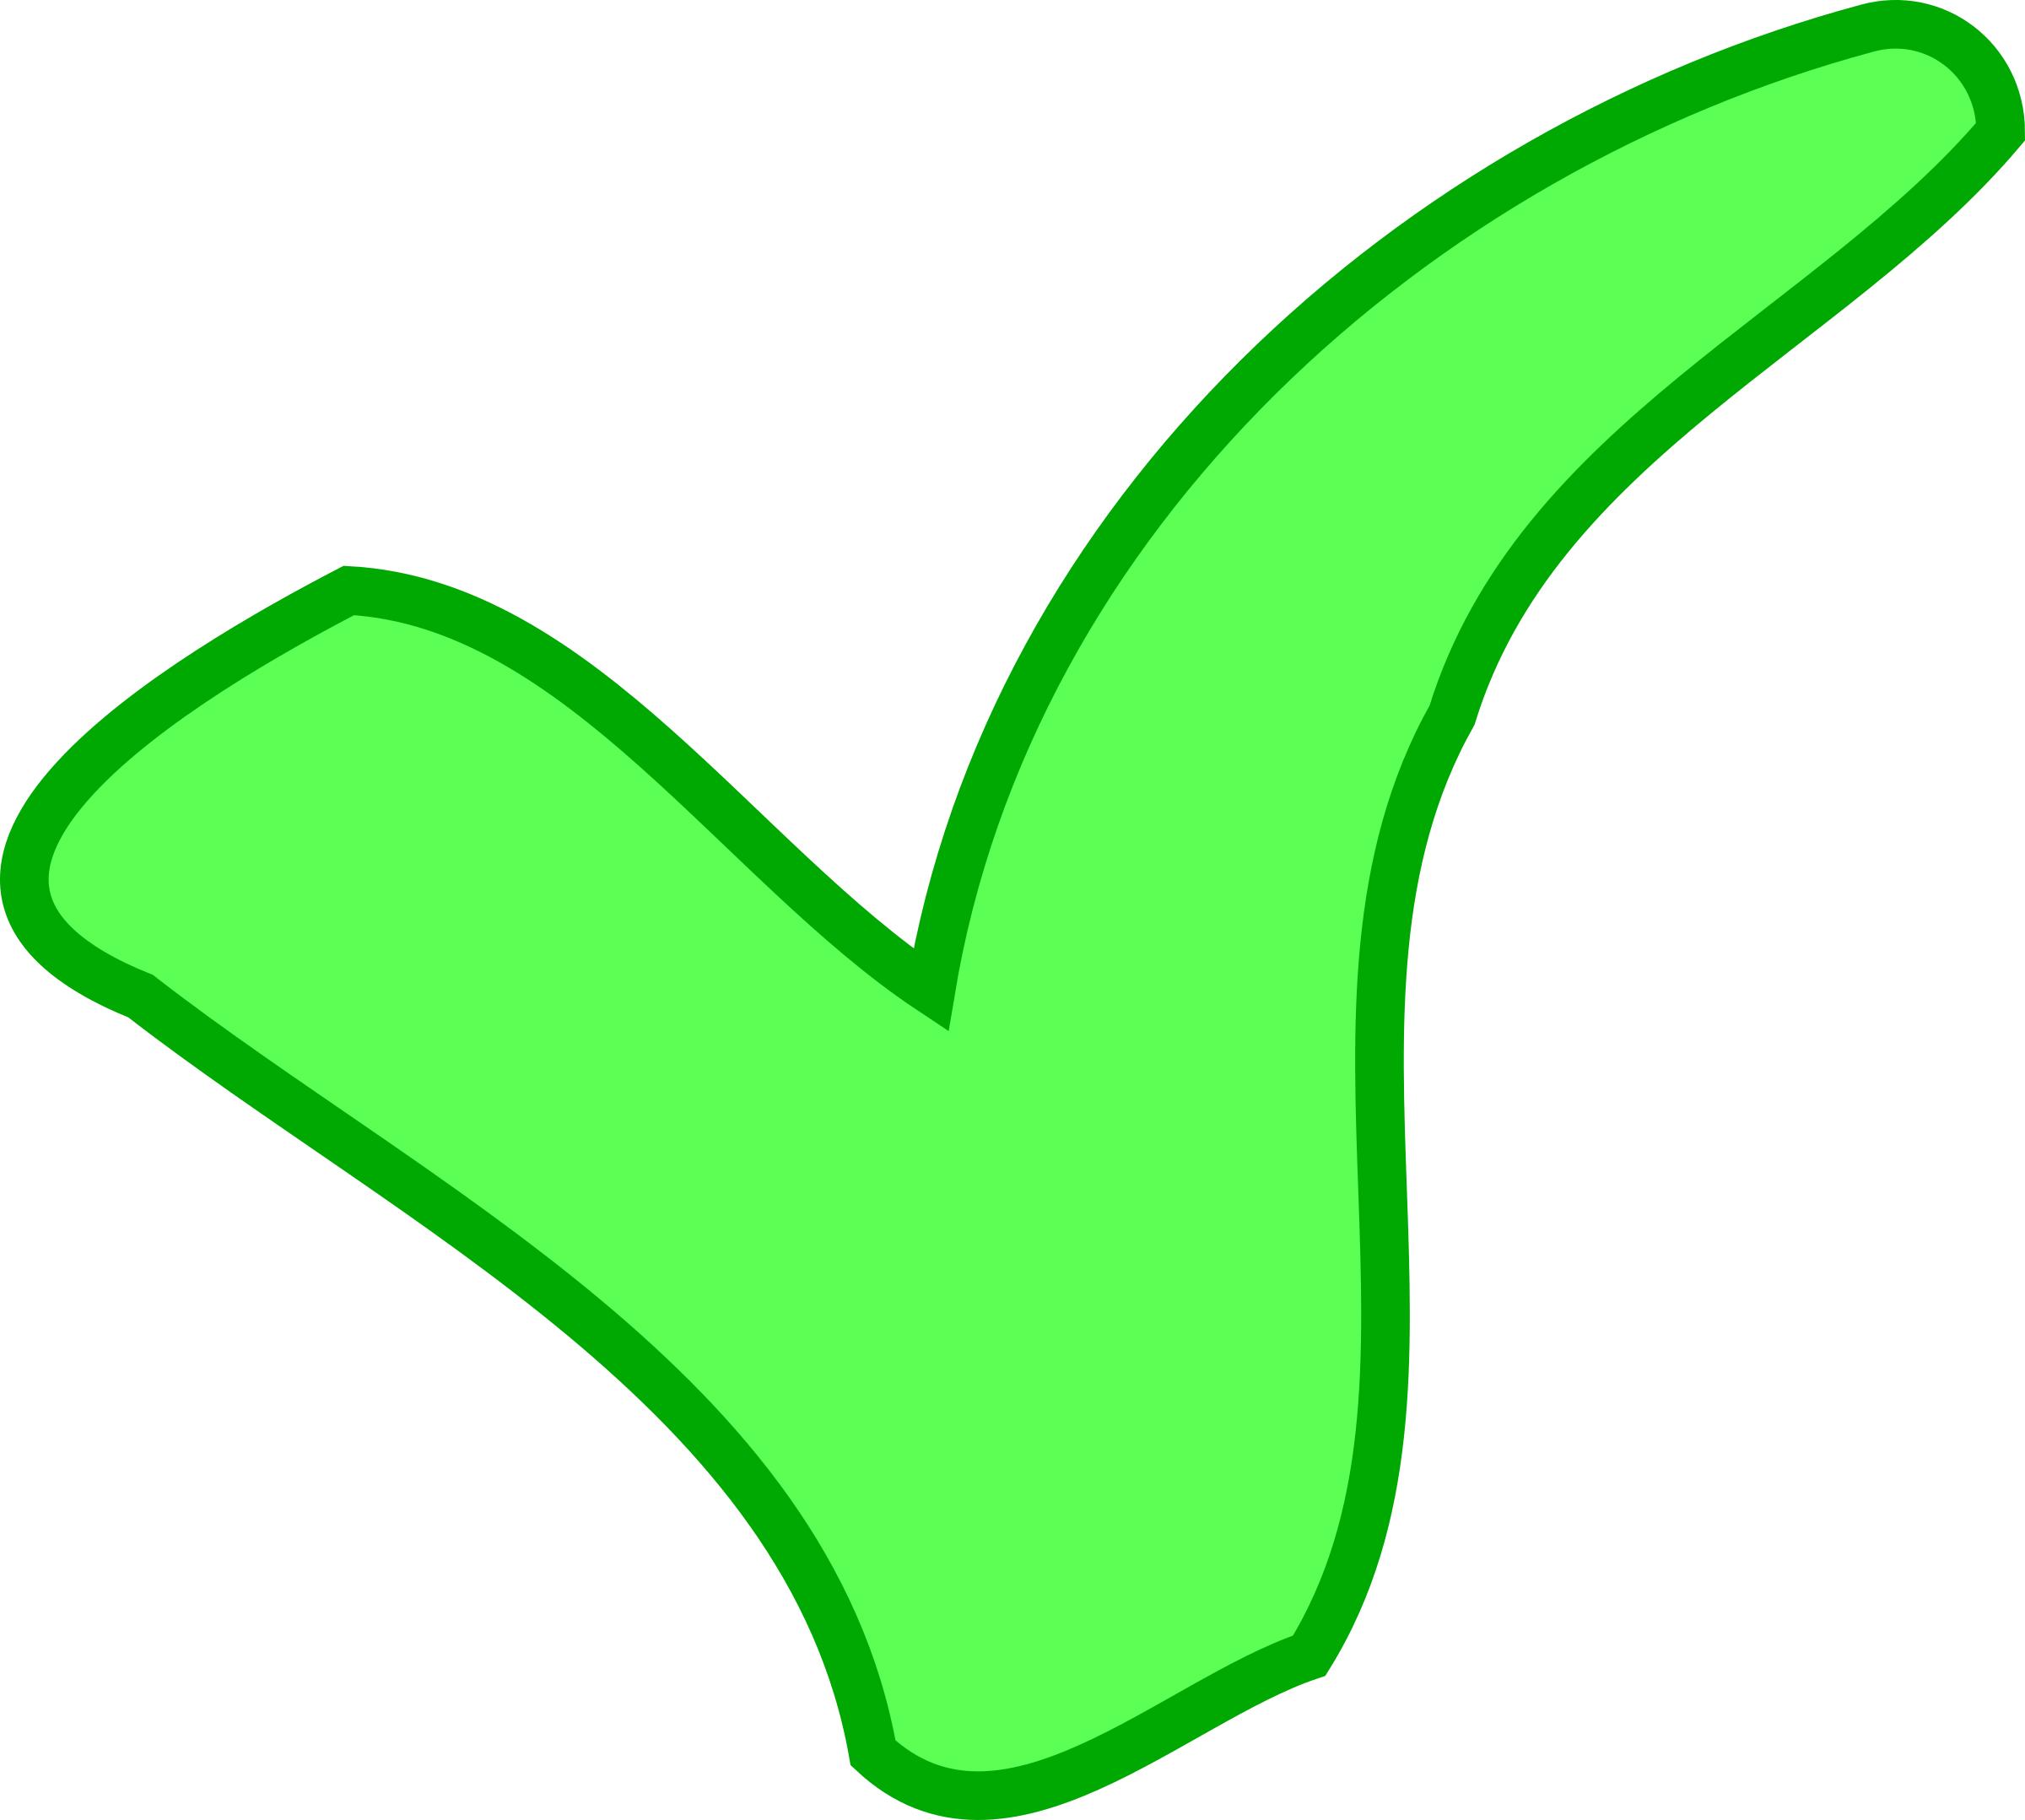 green OK / success symbol PNG icons